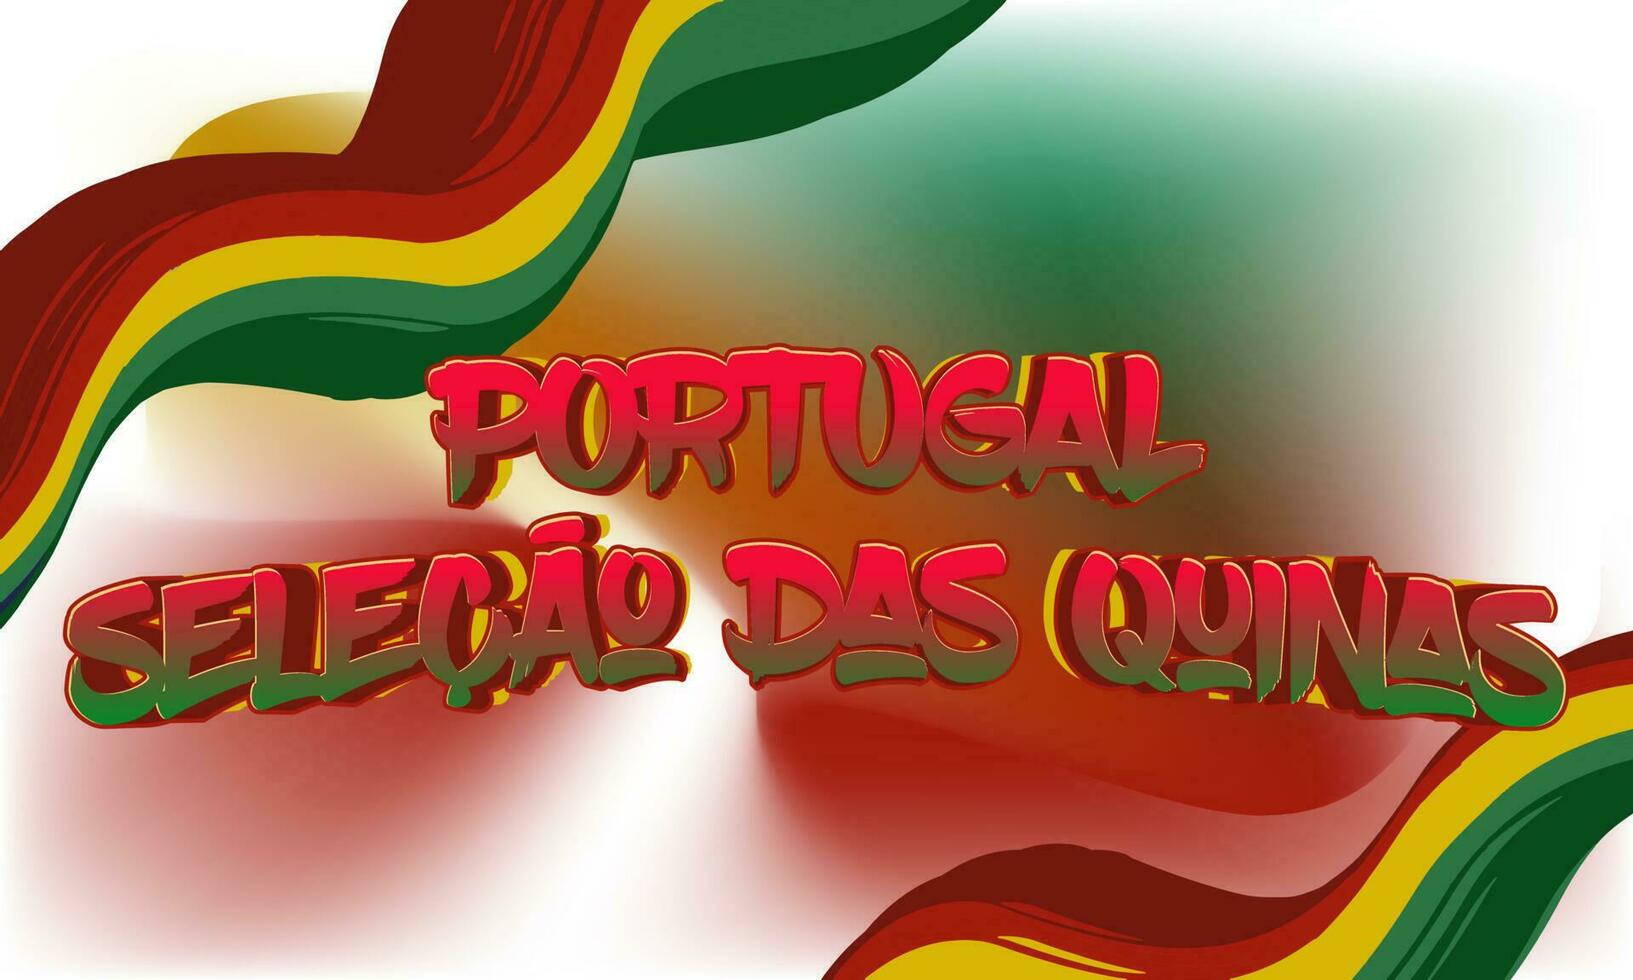 portugal selecao das quinas world football championship background theme vector